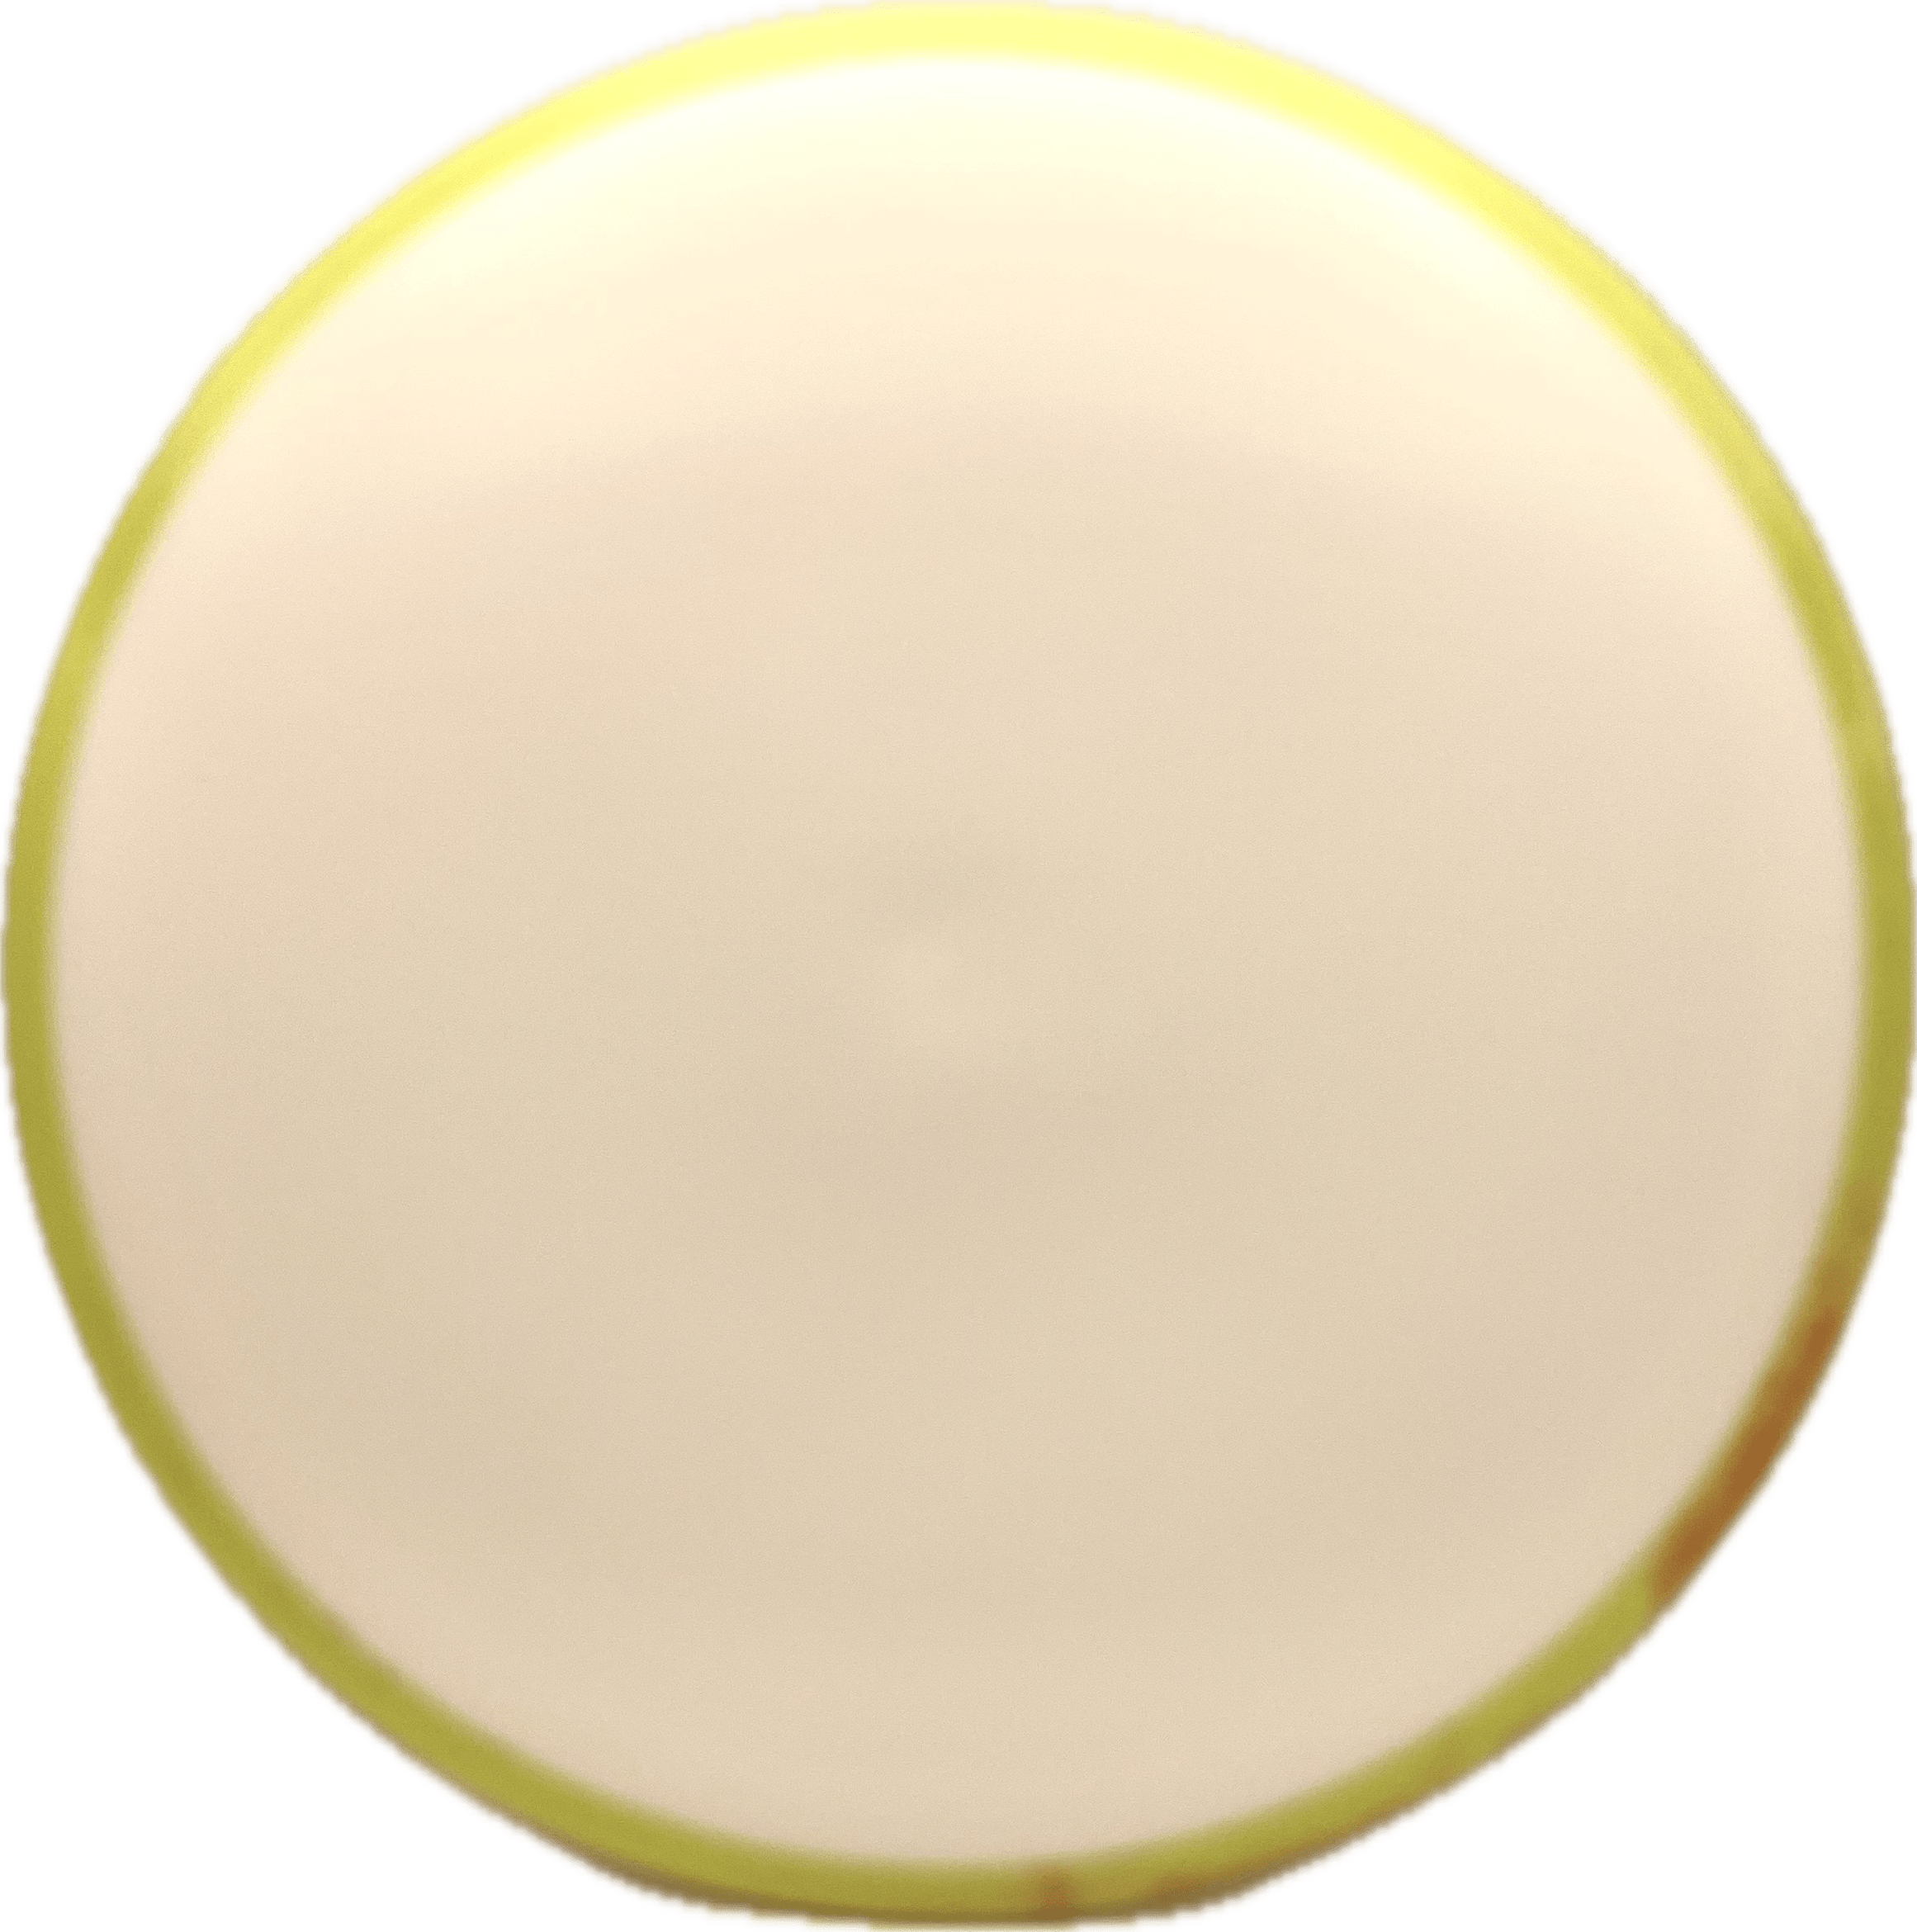 Overthrow Disc Golf Disc Axiom Crave, Fission, 167, White, Bright Green/Orange Rim